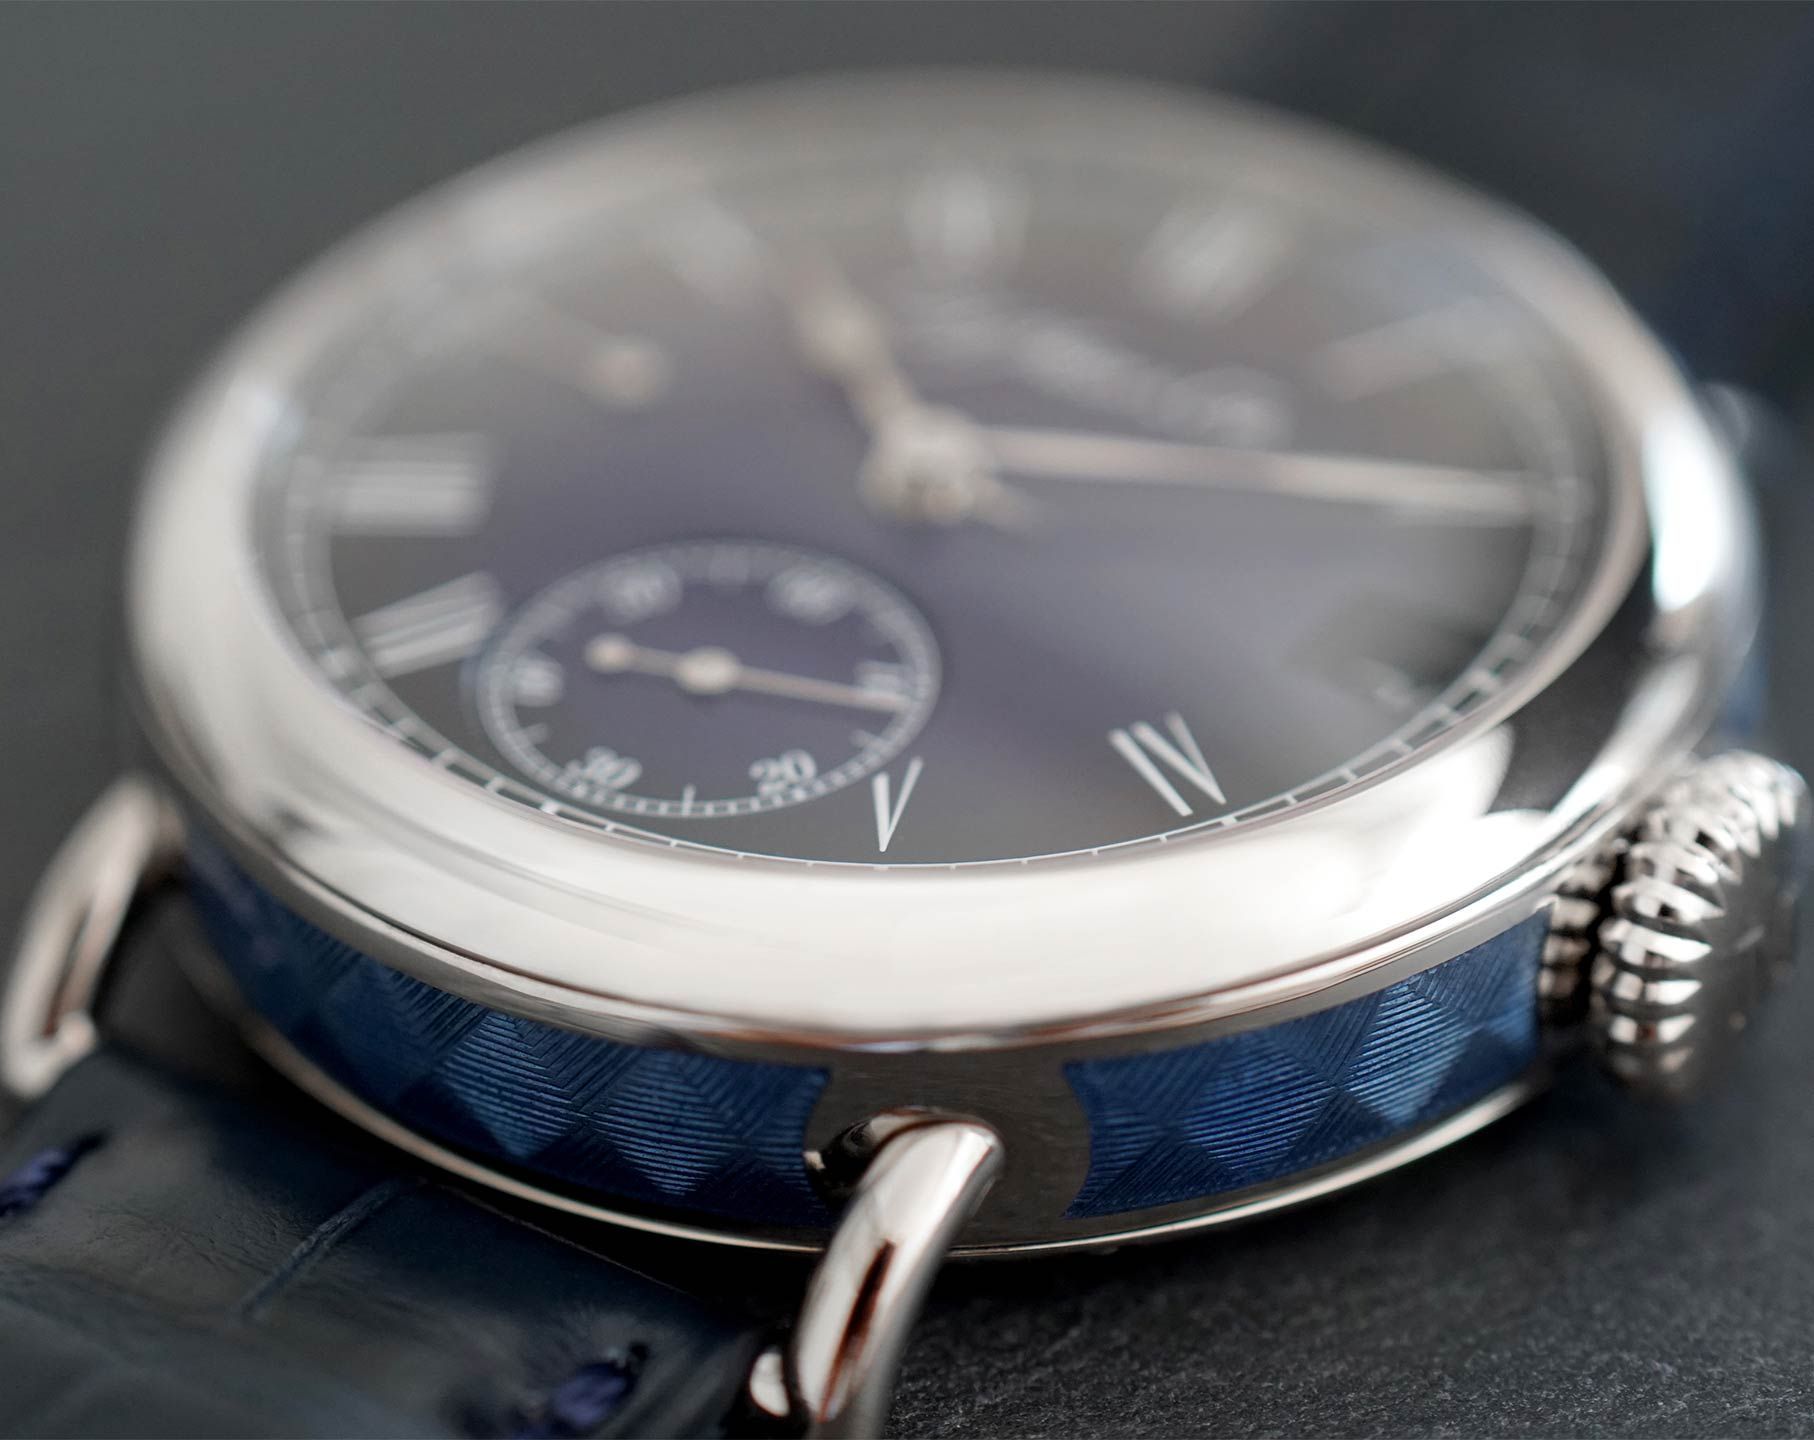 H. Moser & Cie. Heritage Perpetual Calendar Blue Dial 42 mm Manual Winding Watch For Men - 2